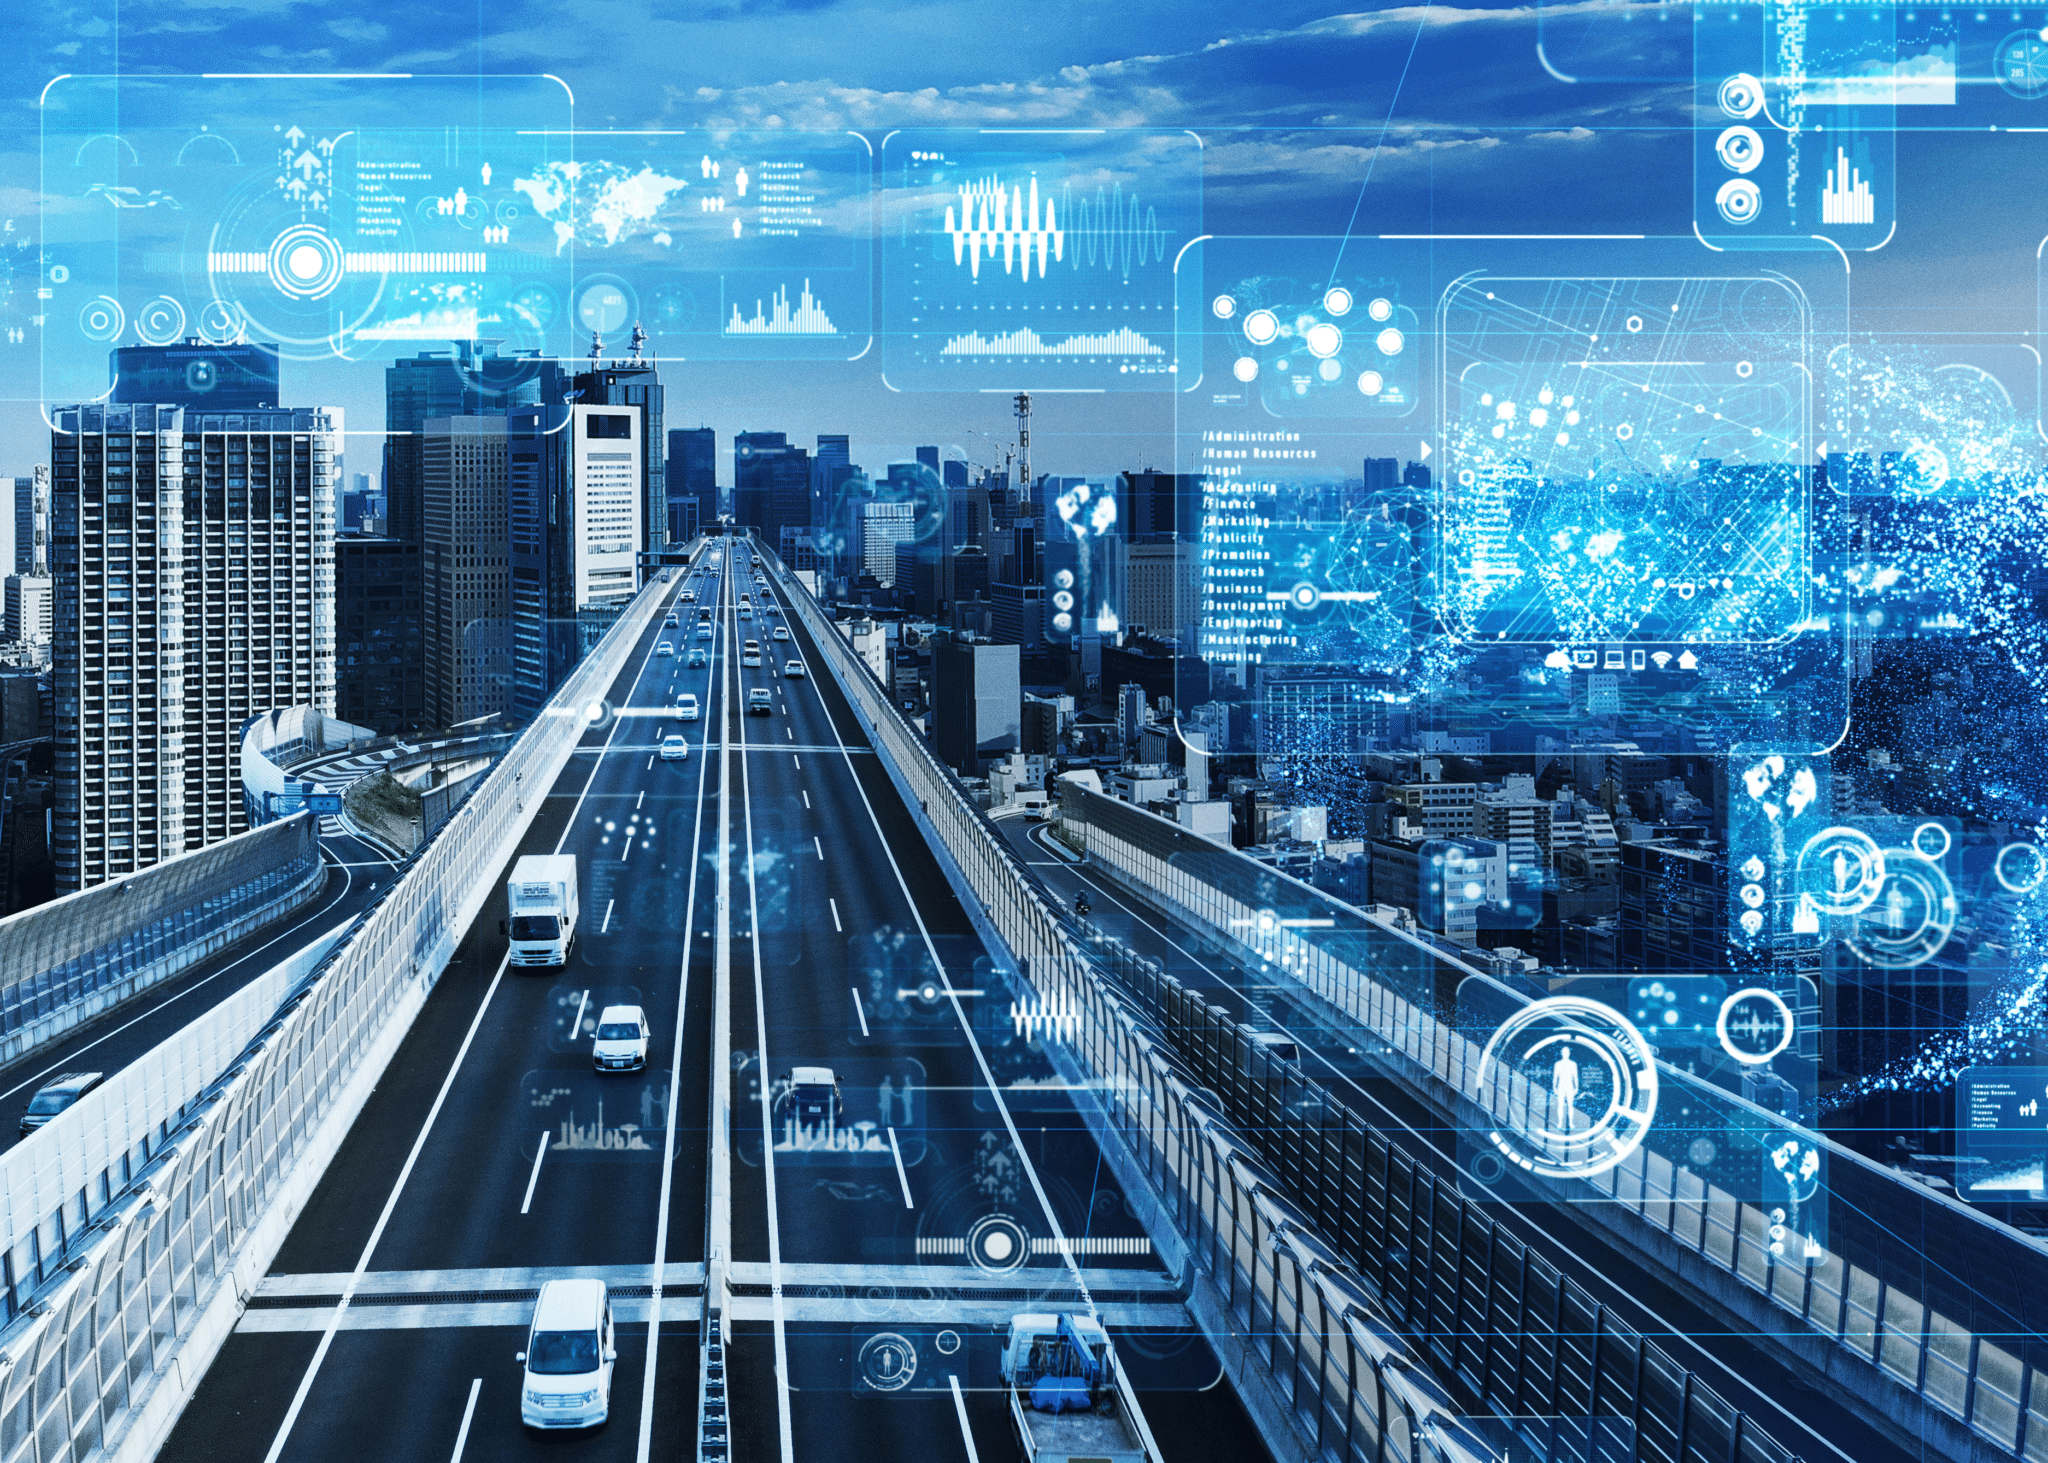 An image illustrating the futuristic mobility of a city with a futuristic bridge.